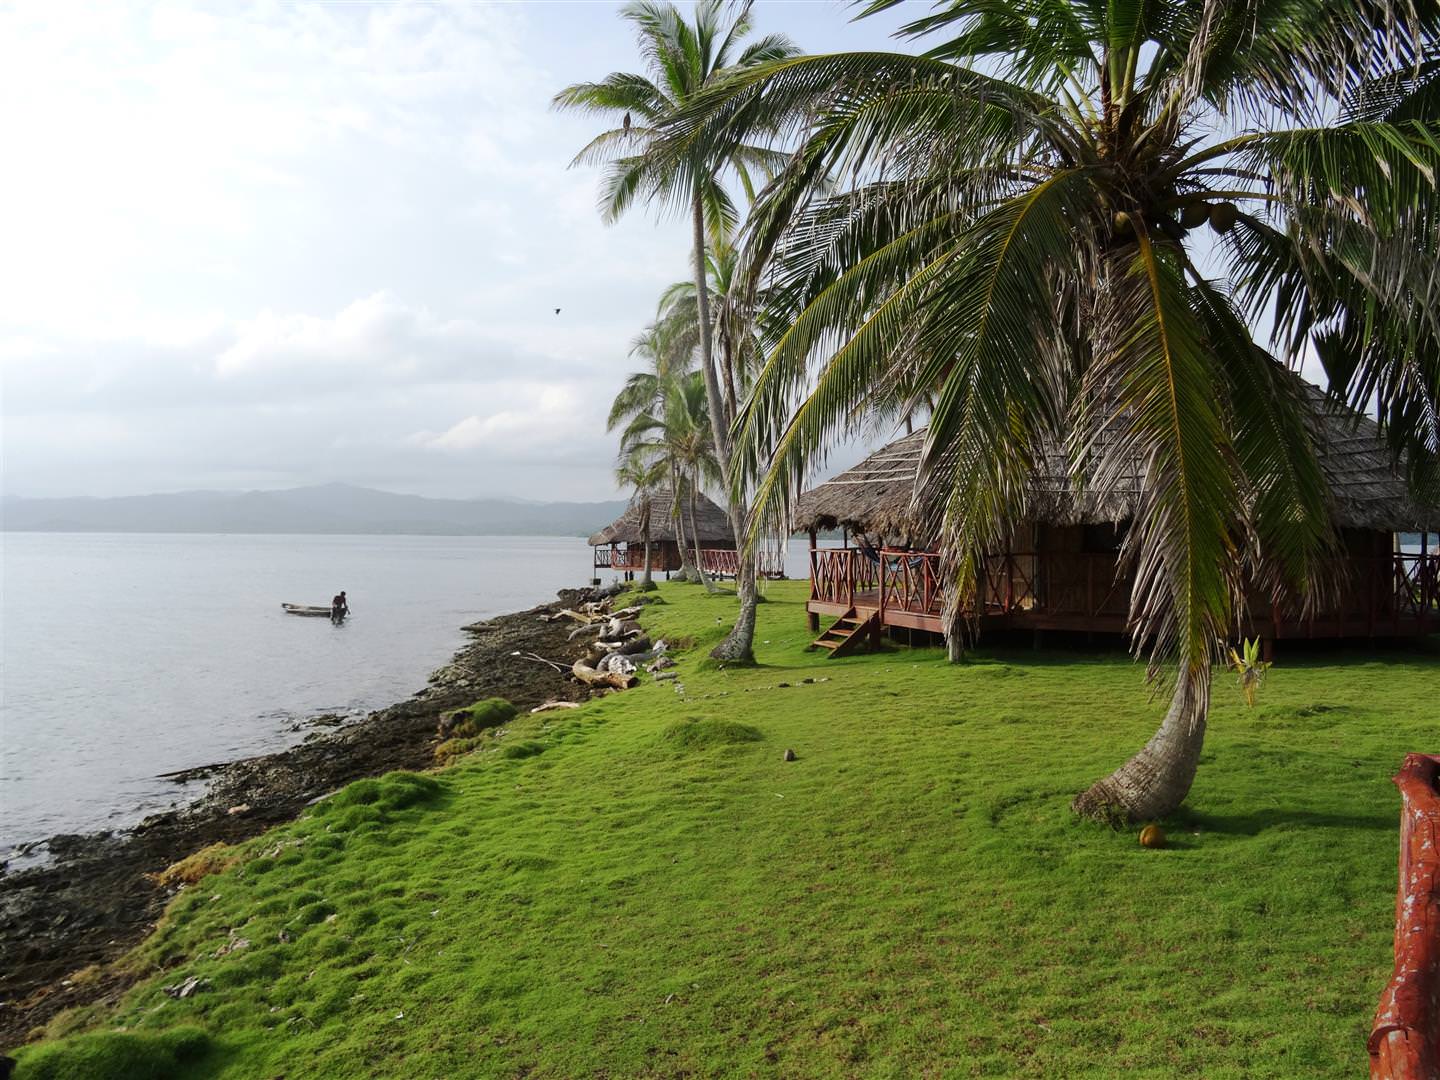 San Blas Inseln in Panama